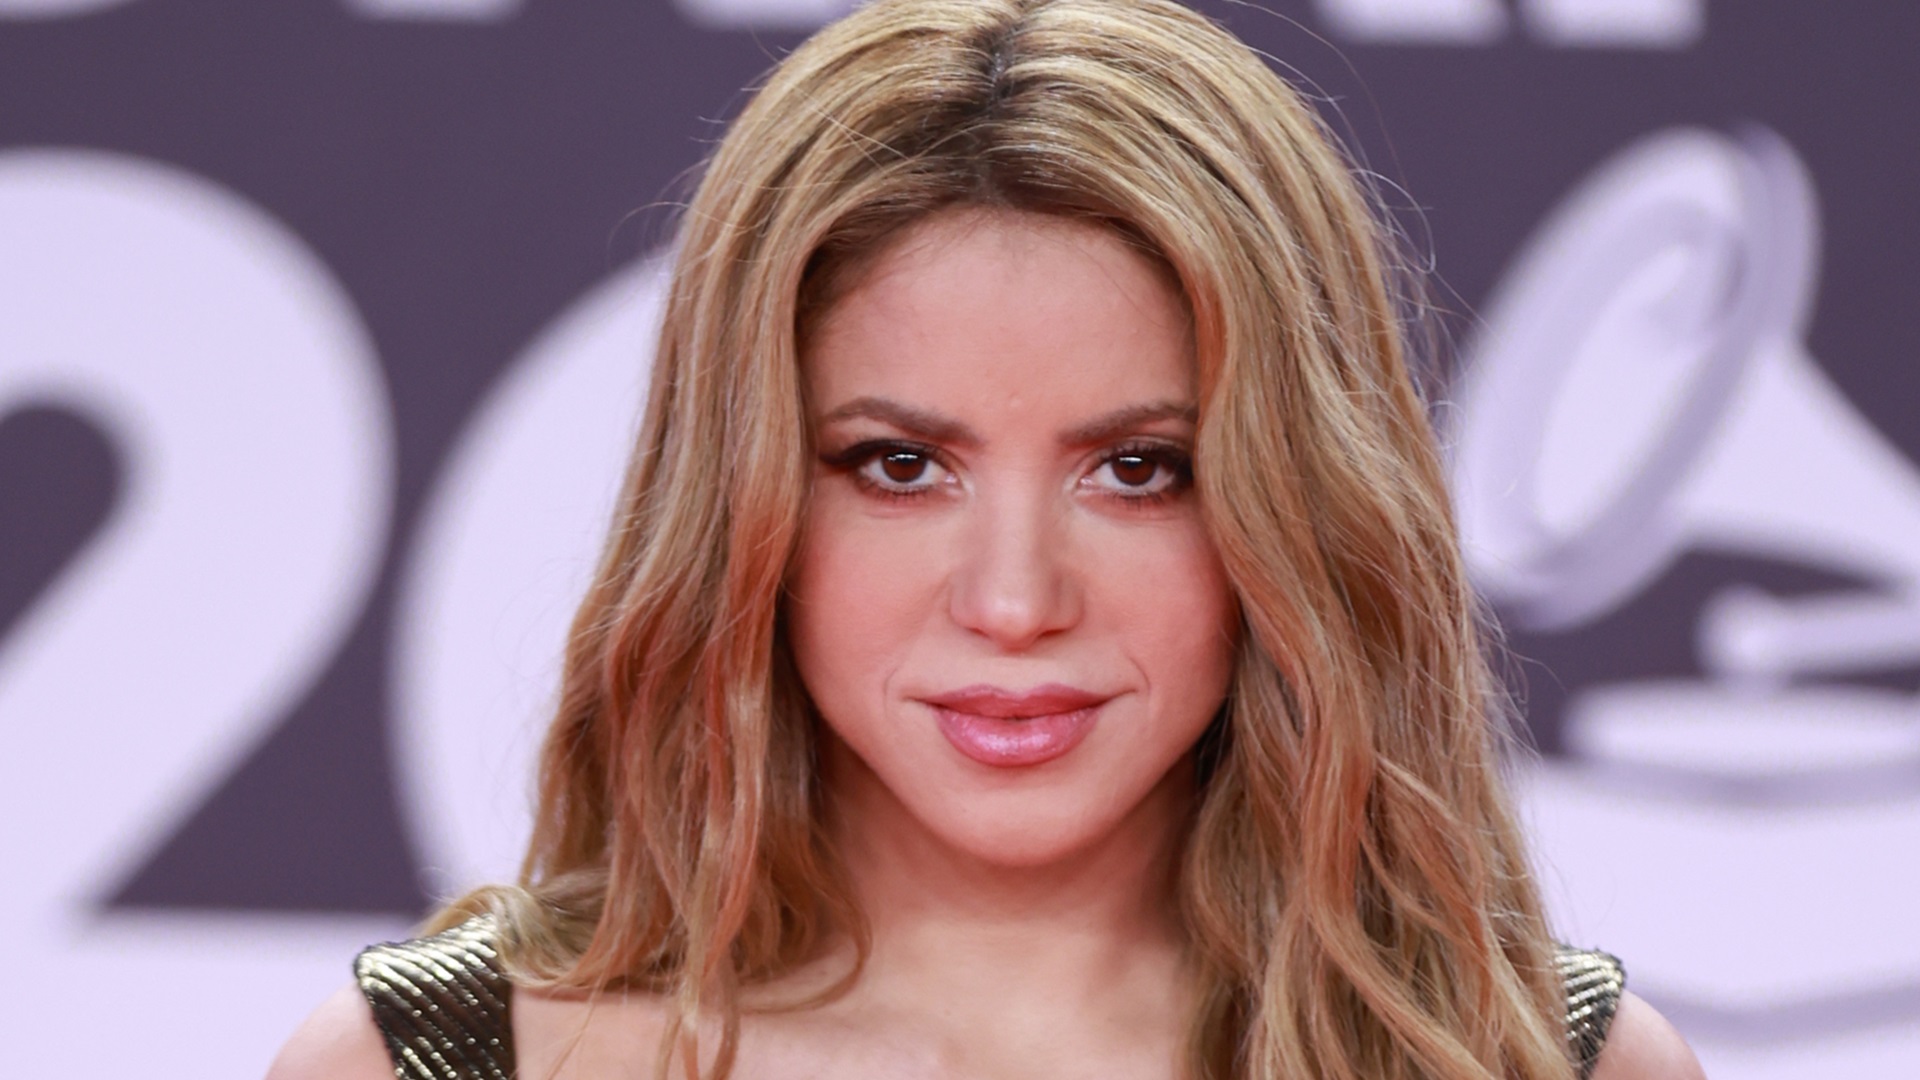 Revelados los secretos del próximo álbum de Shakira